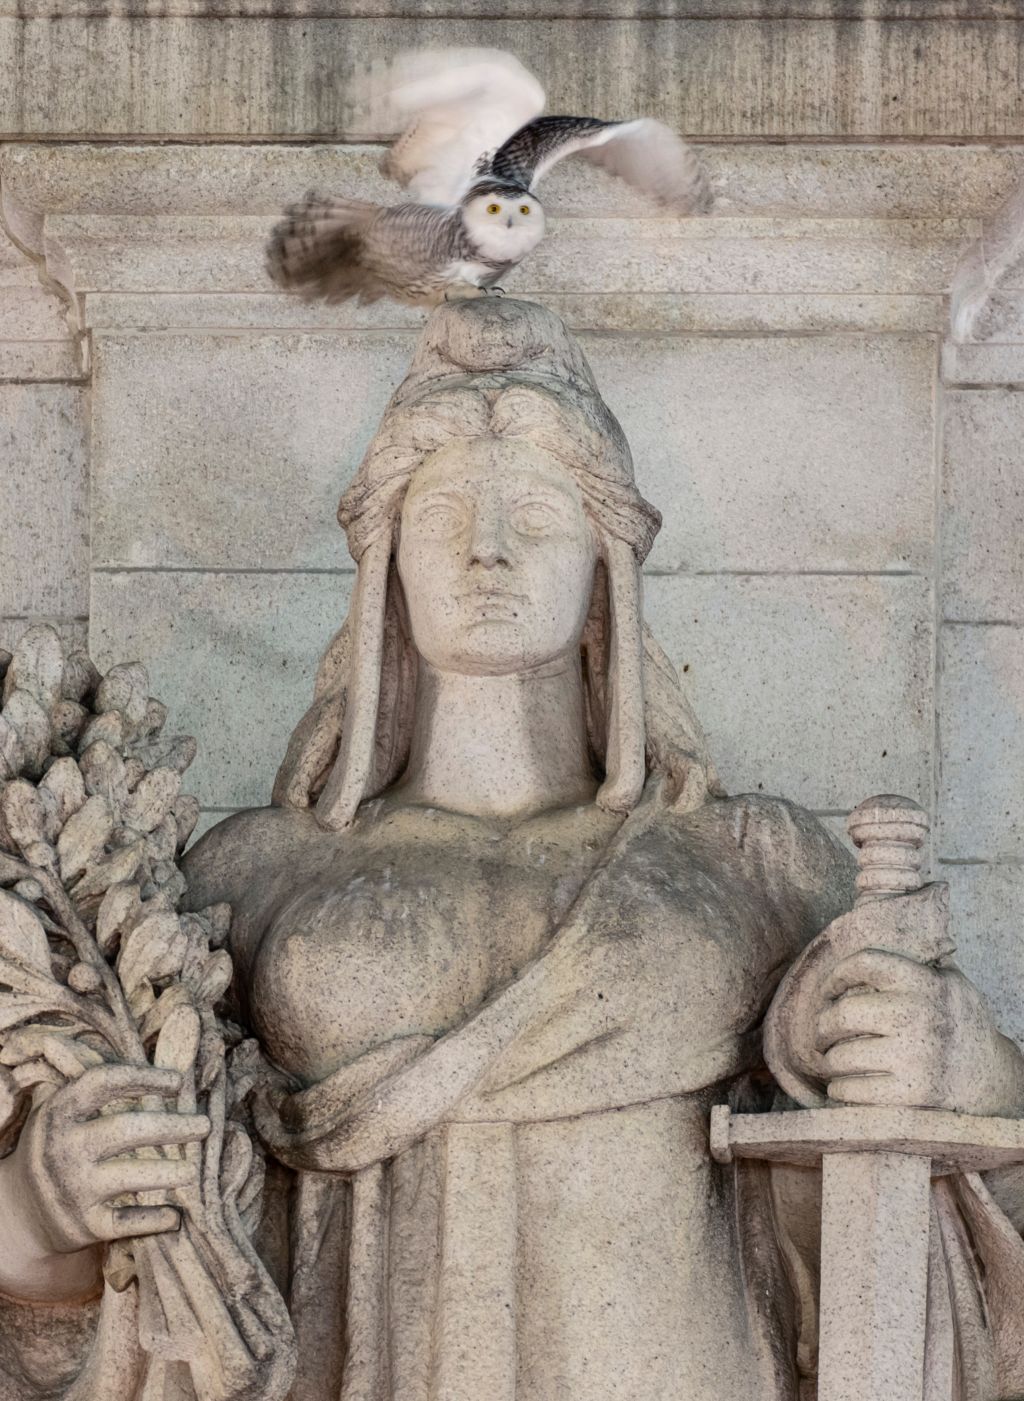 Photos: Rare snowy owl visits D.C. monuments